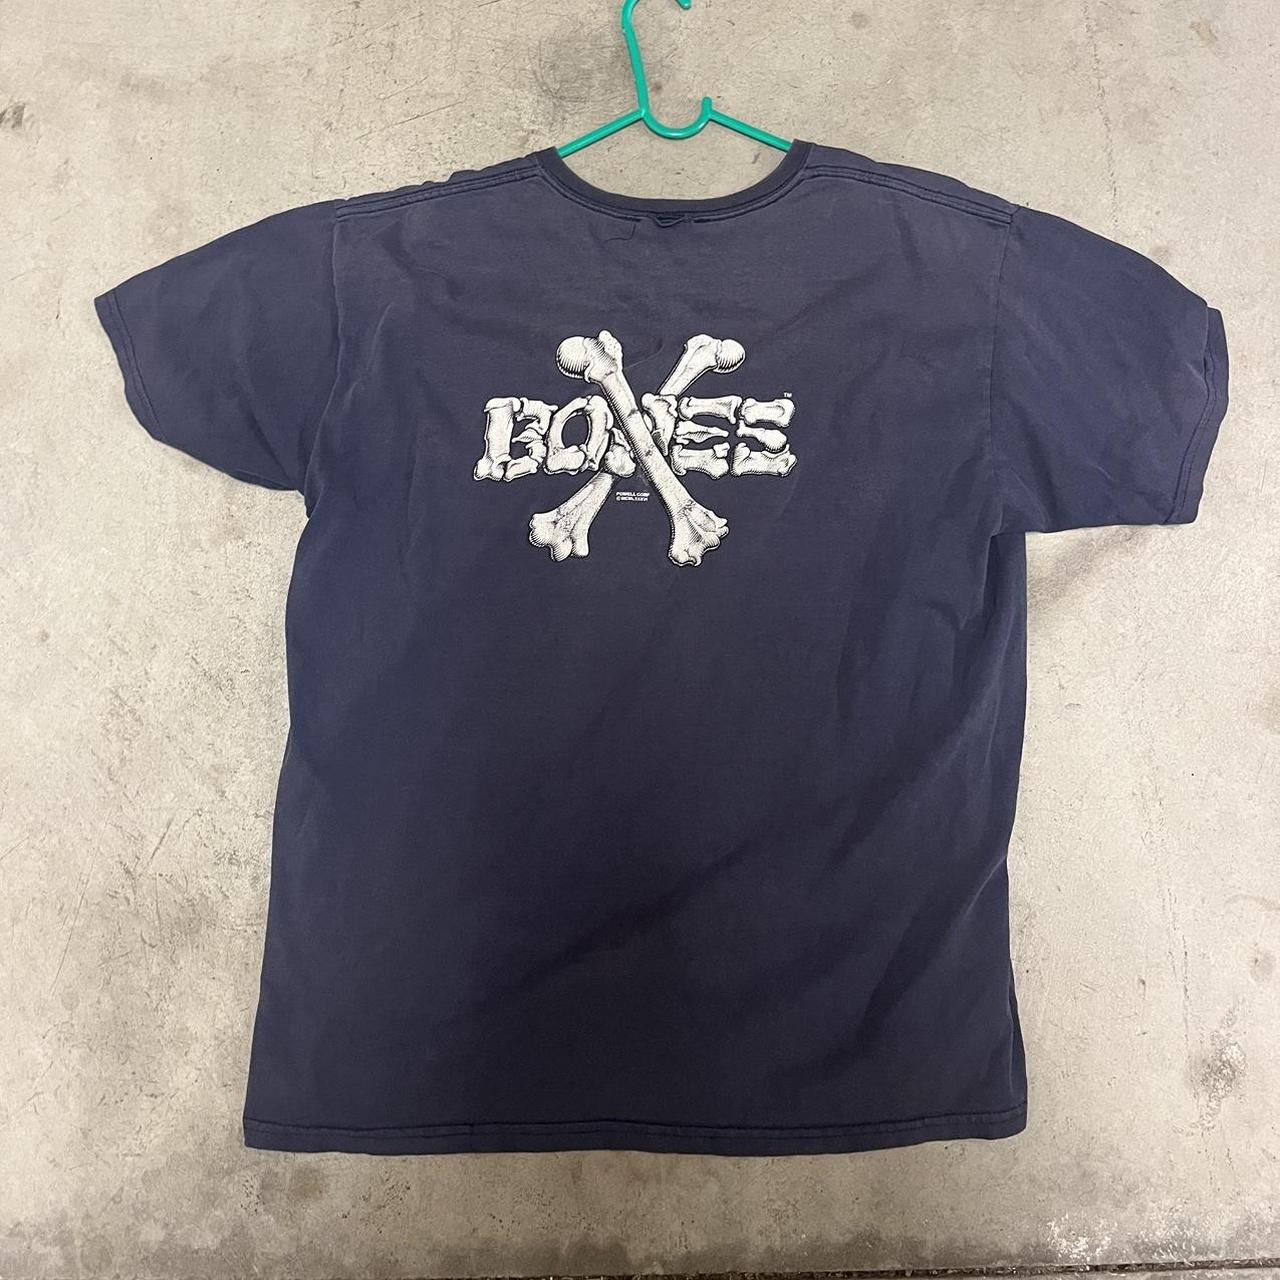 Bones Men's Blue and Navy T-shirt (3)